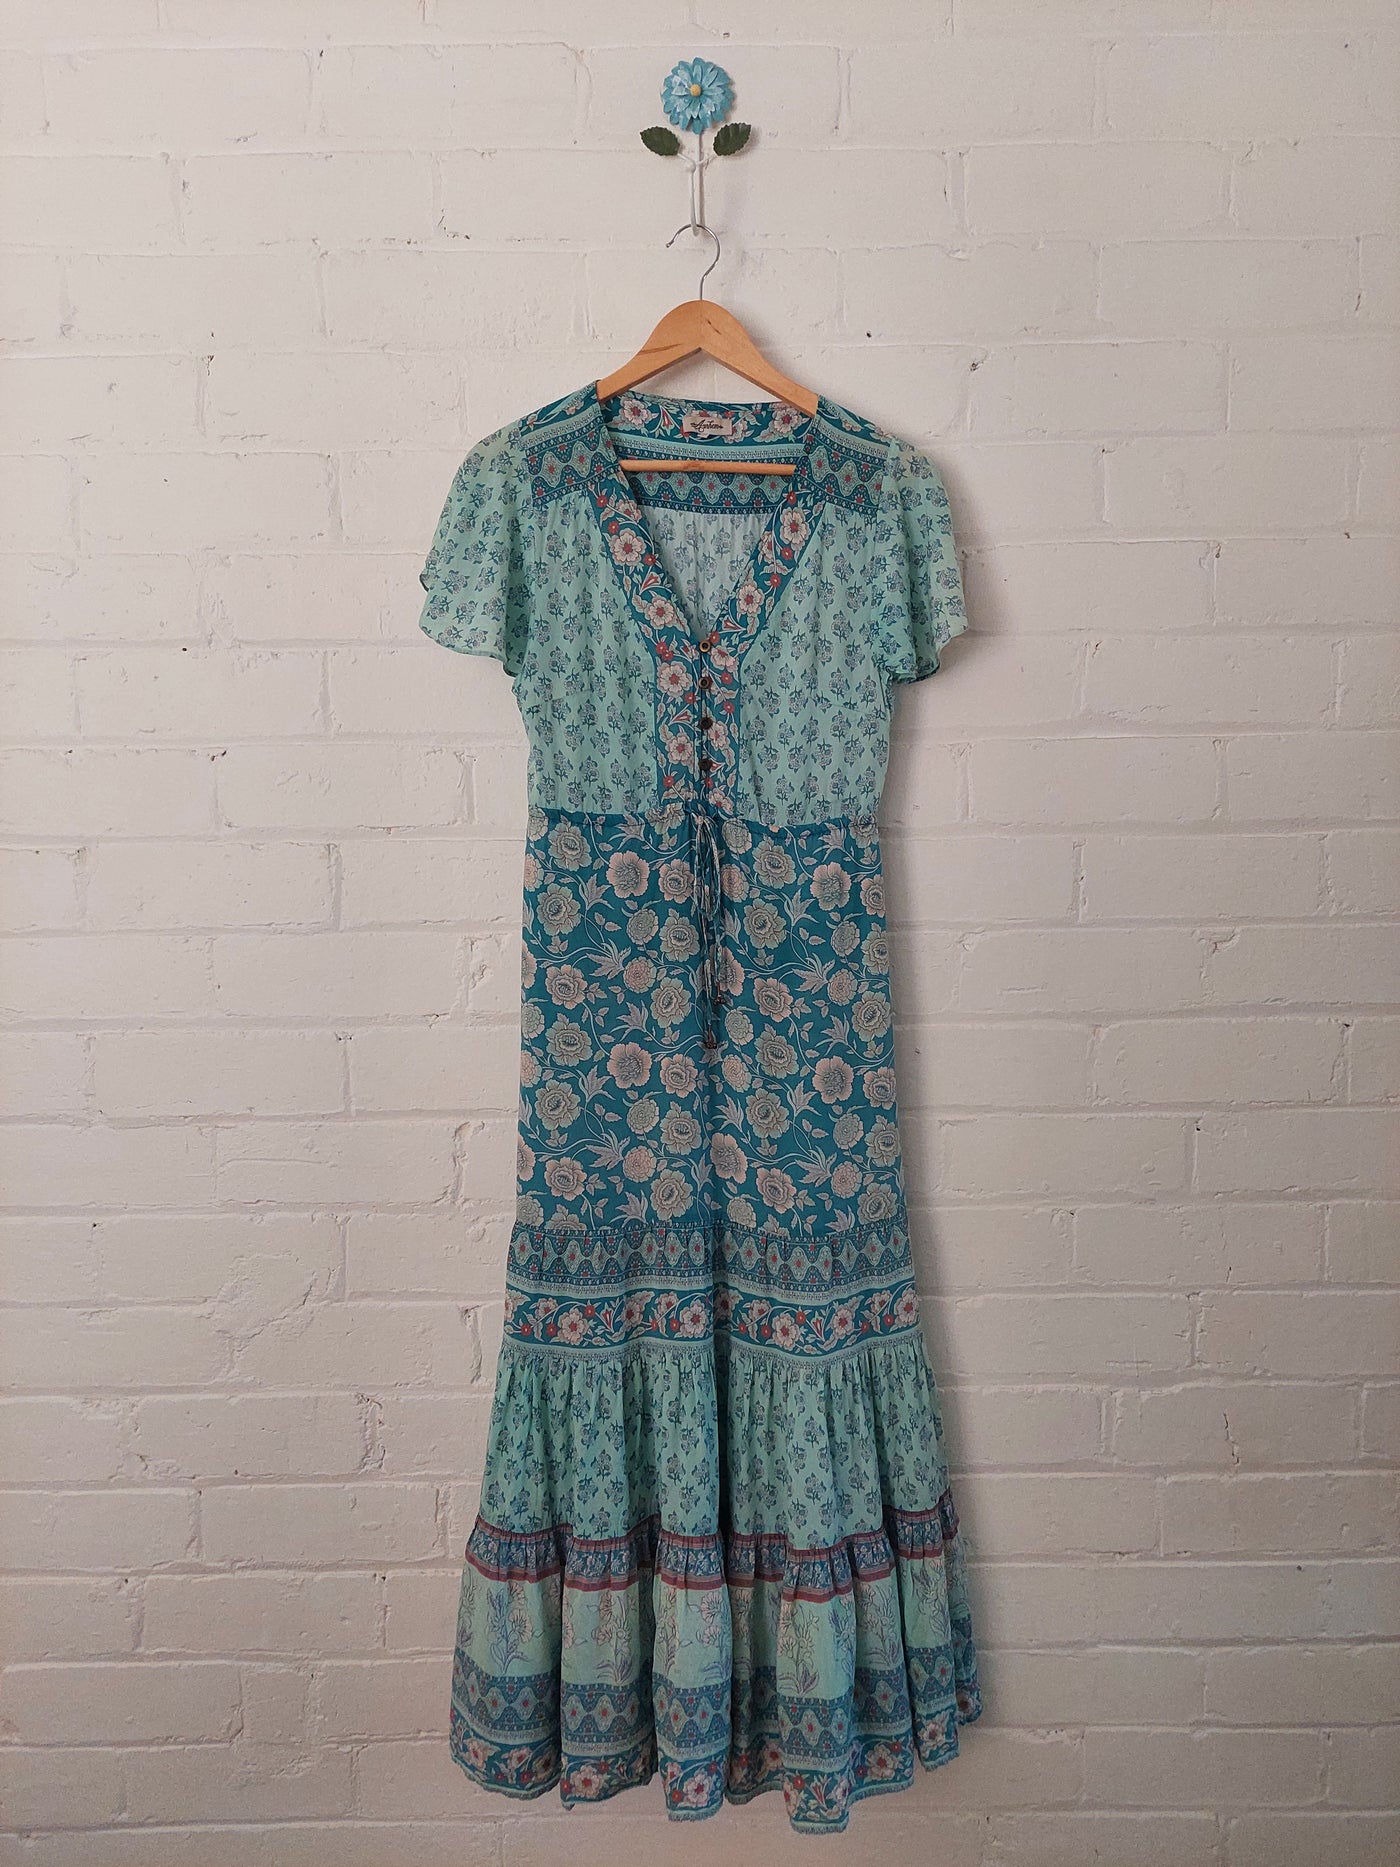 Arnhem Clothing 'Abigail' Maxi Dress in Opal, Size 8